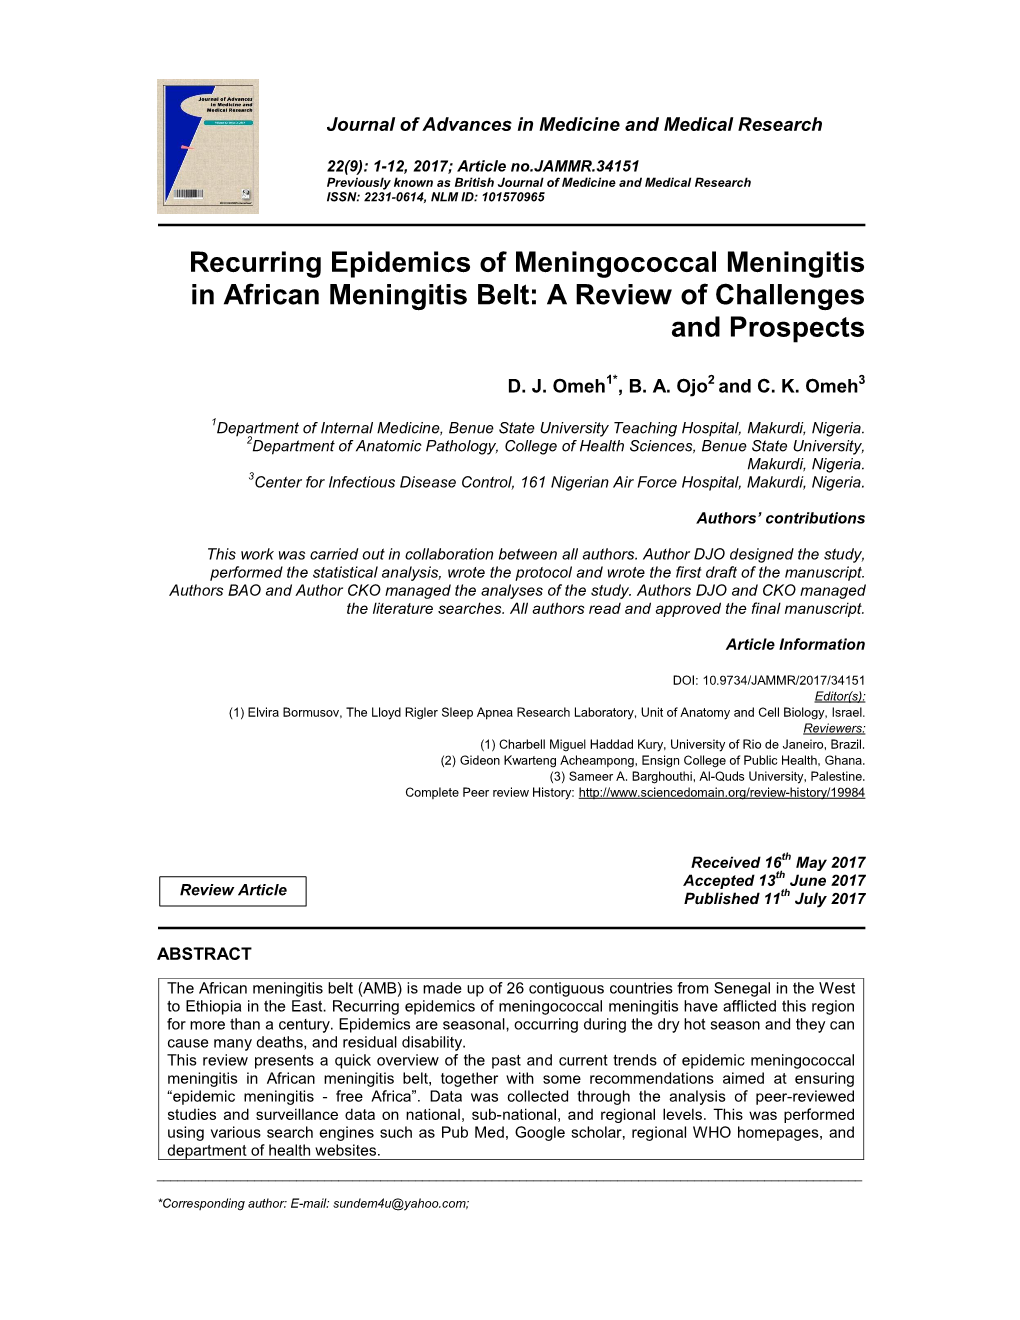 Recurring Epidemics of Meningococcal Meningitis in African Meningitis Belt: a Review of Challenges and Prospects